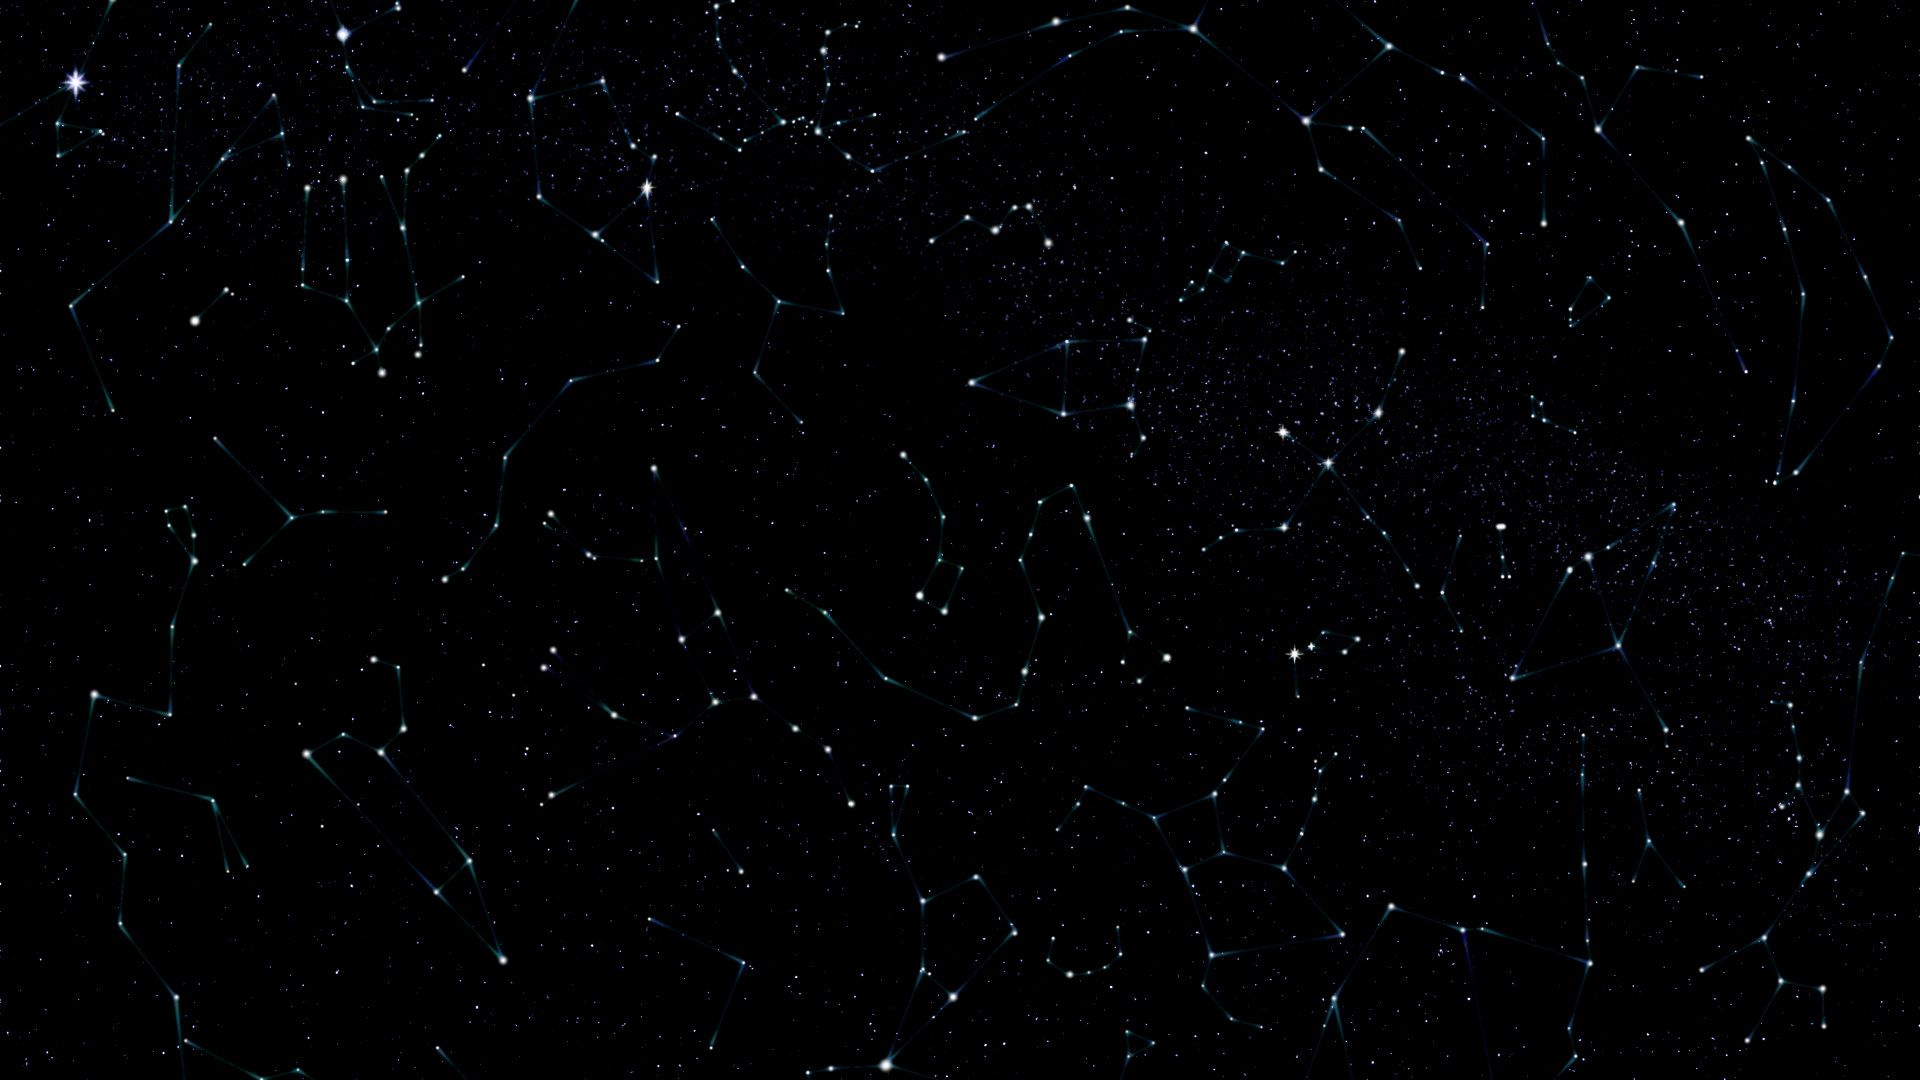 Constellation Background Tumblr